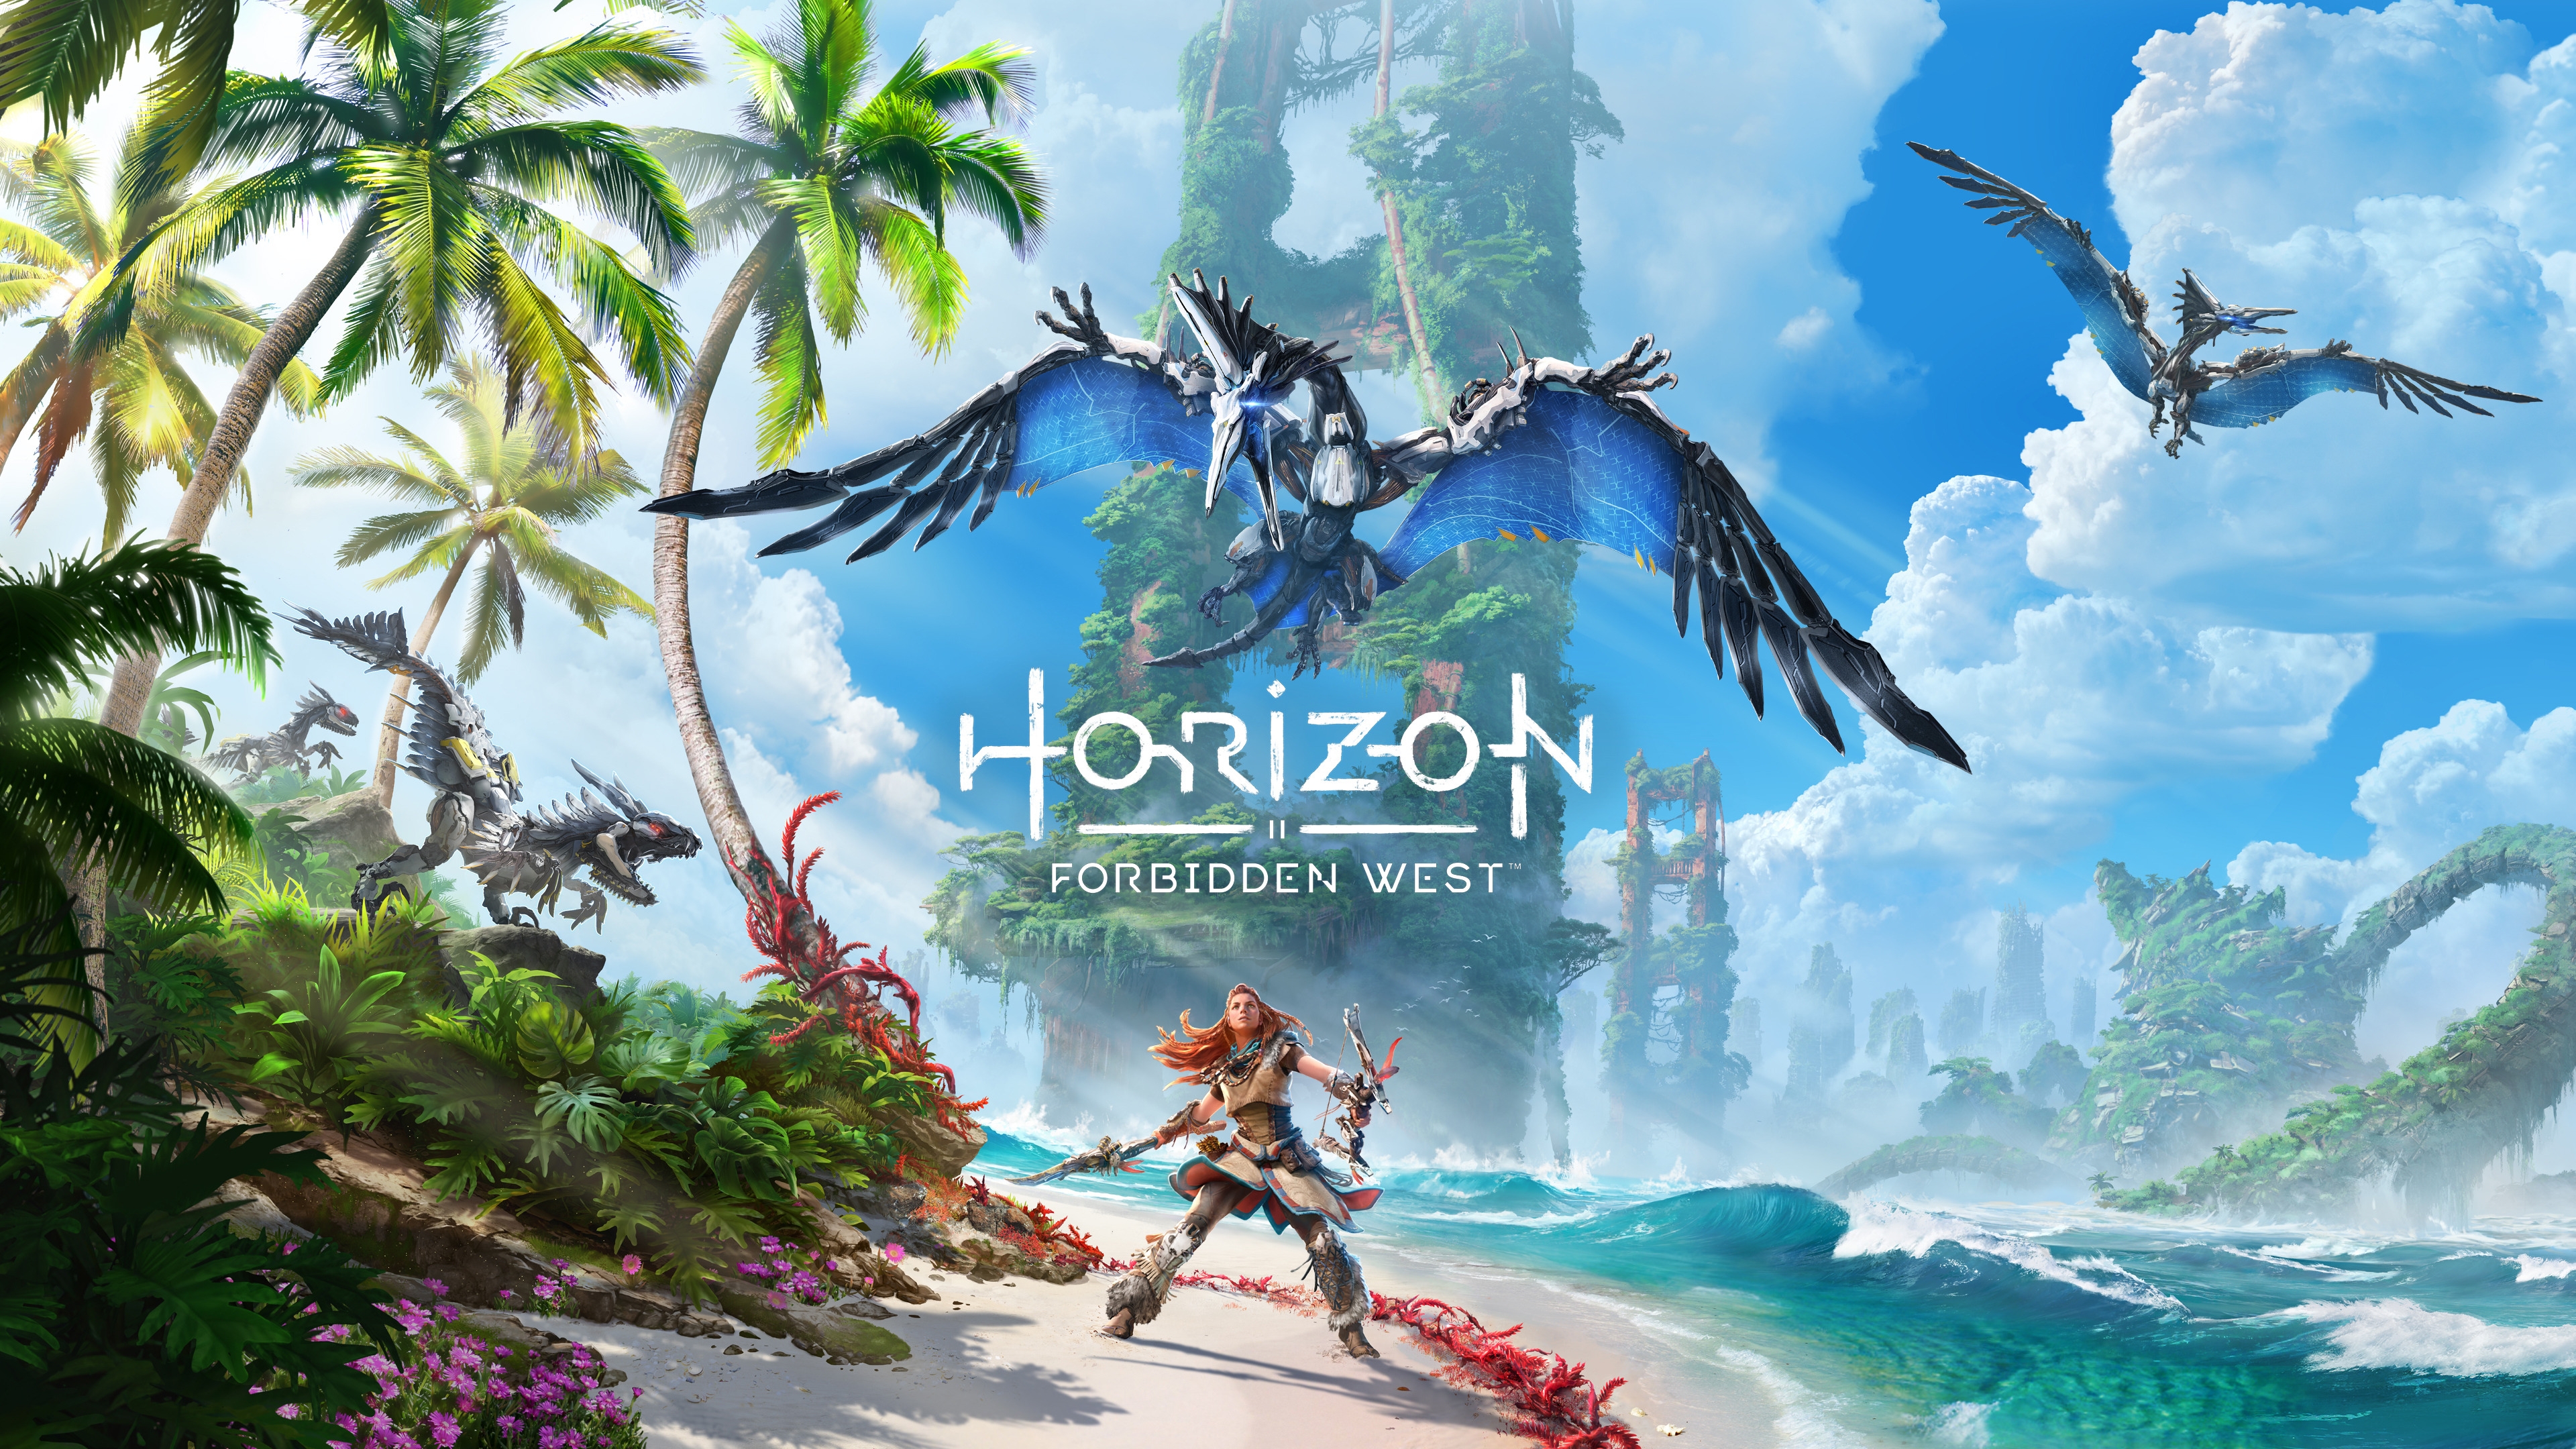 HD wallpaper, 2020 Games, Aloy, Horizon Forbidden West, Playstation 5, Artwork